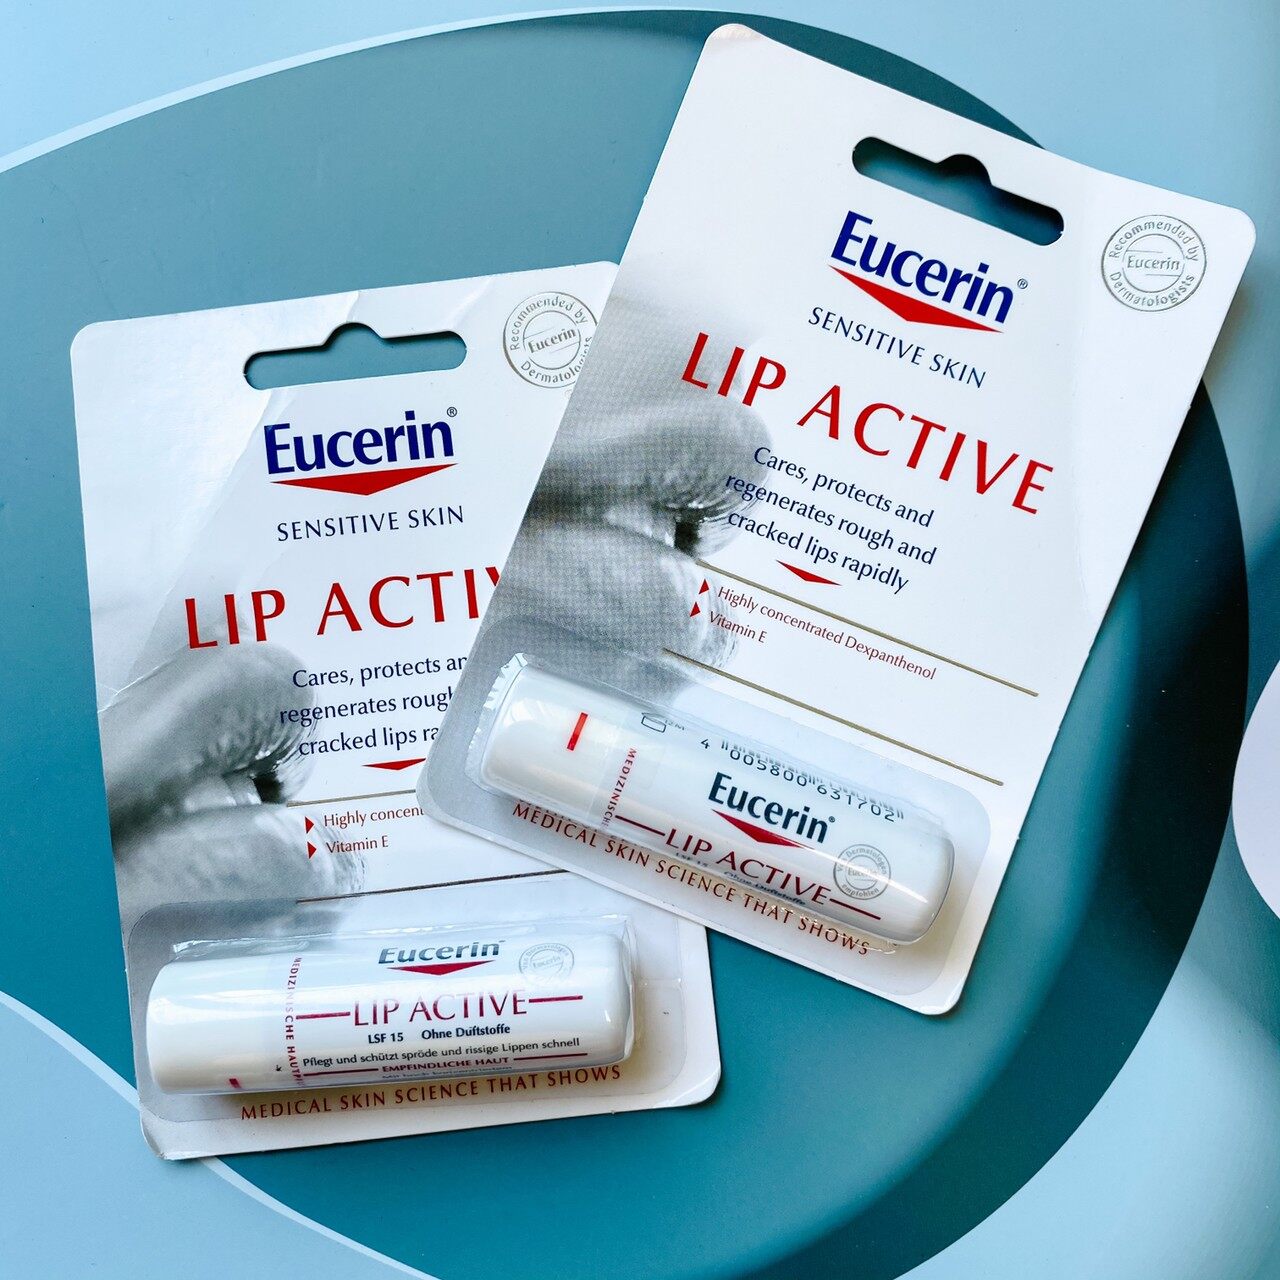 Eucerin LIP ACTIVE 4.8 g. - ลิปมันผสมสารป้องกันแสงแดด หมดอายุ 09/2022